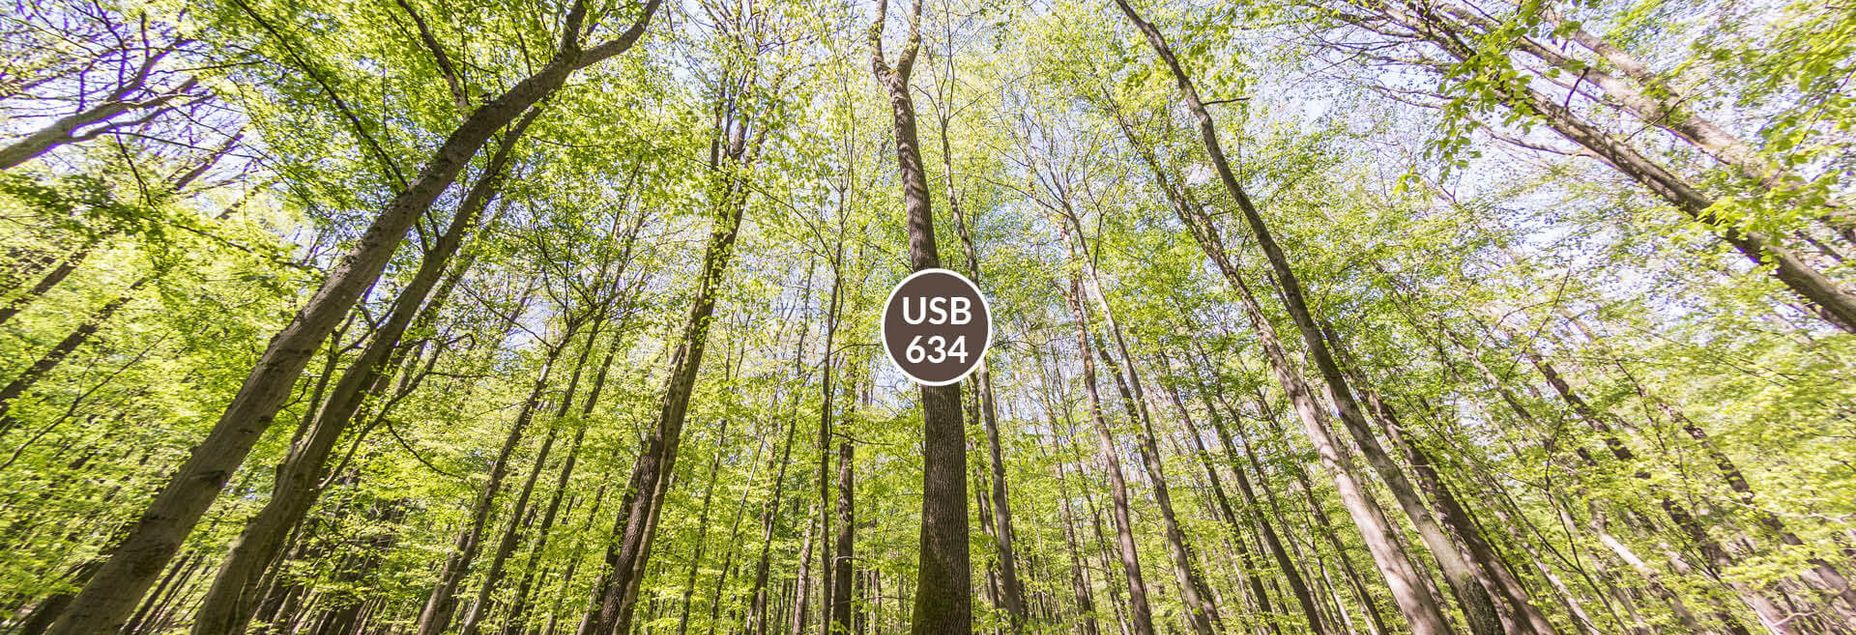 Baum USB 634 - Fisheyeperspektive